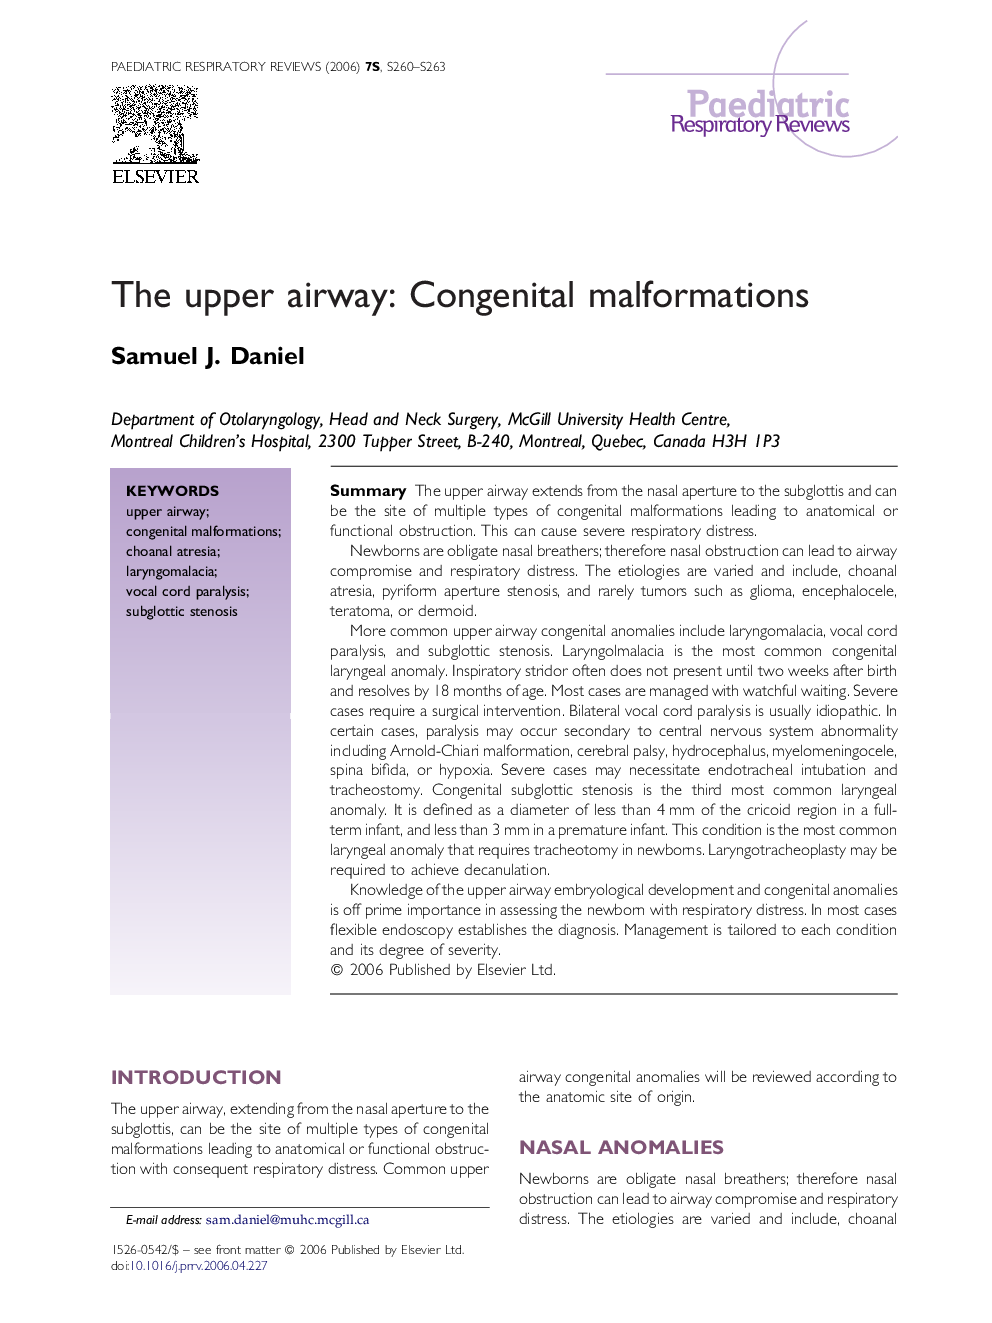 The upper airway: Congenital malformations